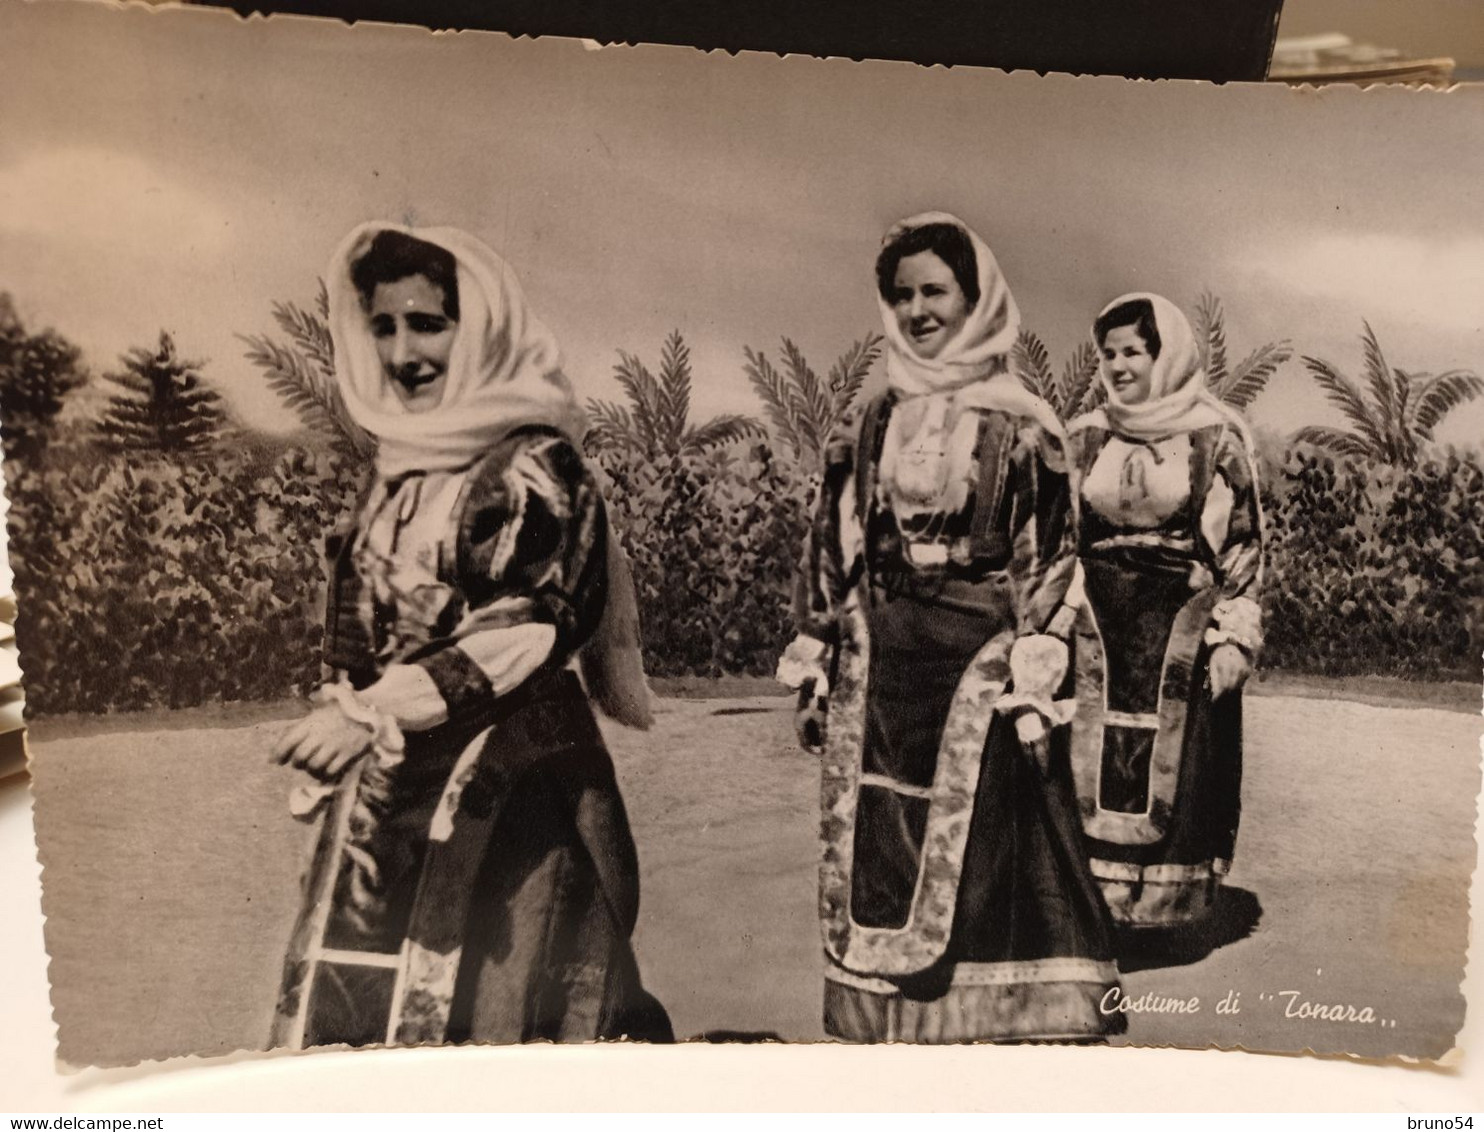 Cartolina Costume Di Tanara Provincia Di Nuoro 1954 - Nuoro